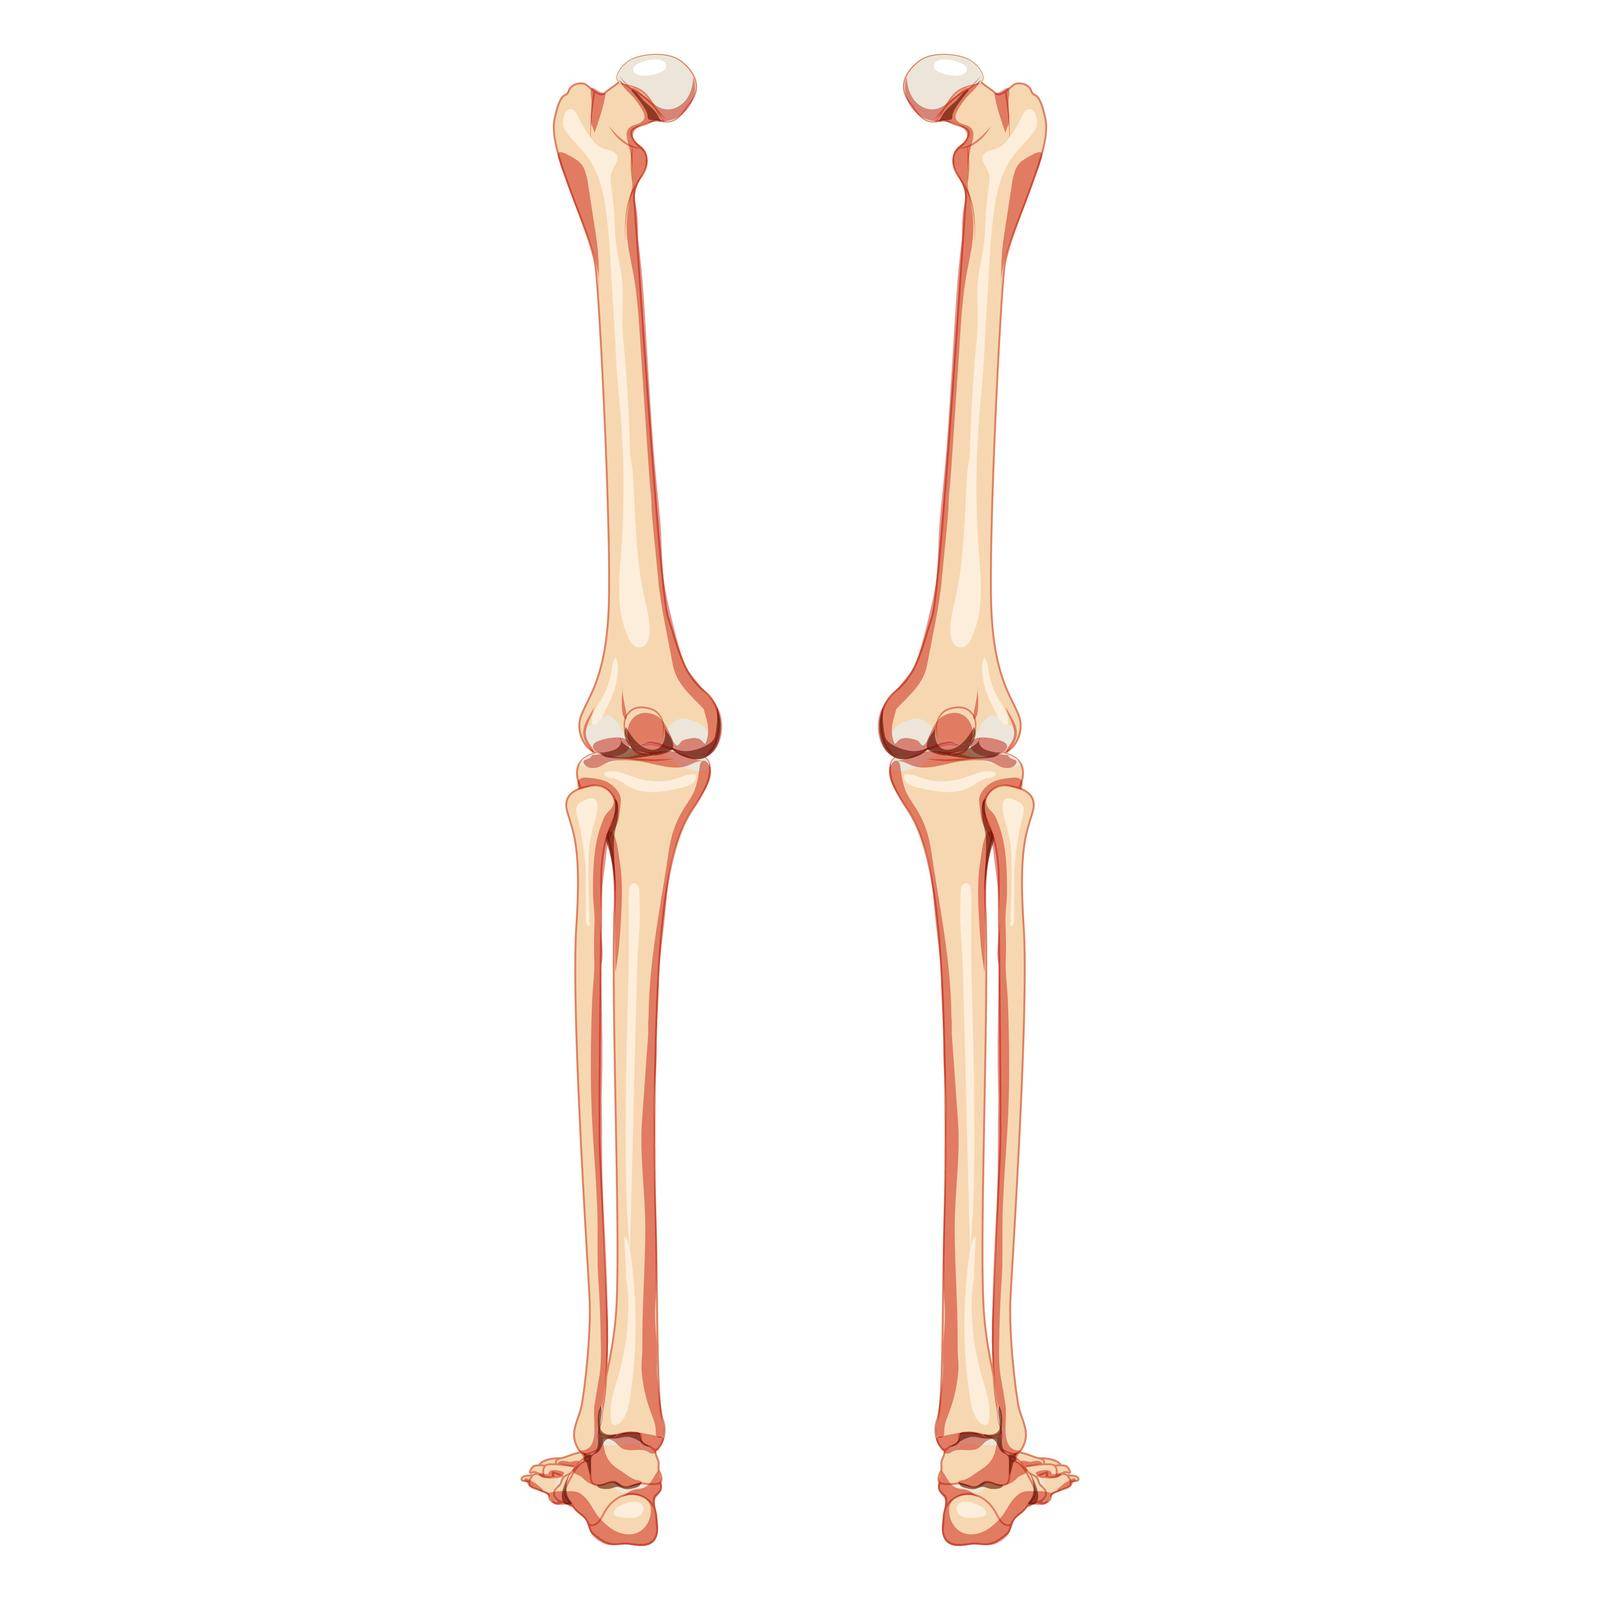 Thighs and legs lower limb Skeleton Human back view. Set of Anatomically correct femur, patella, fibula realistic flat by Vectoressa